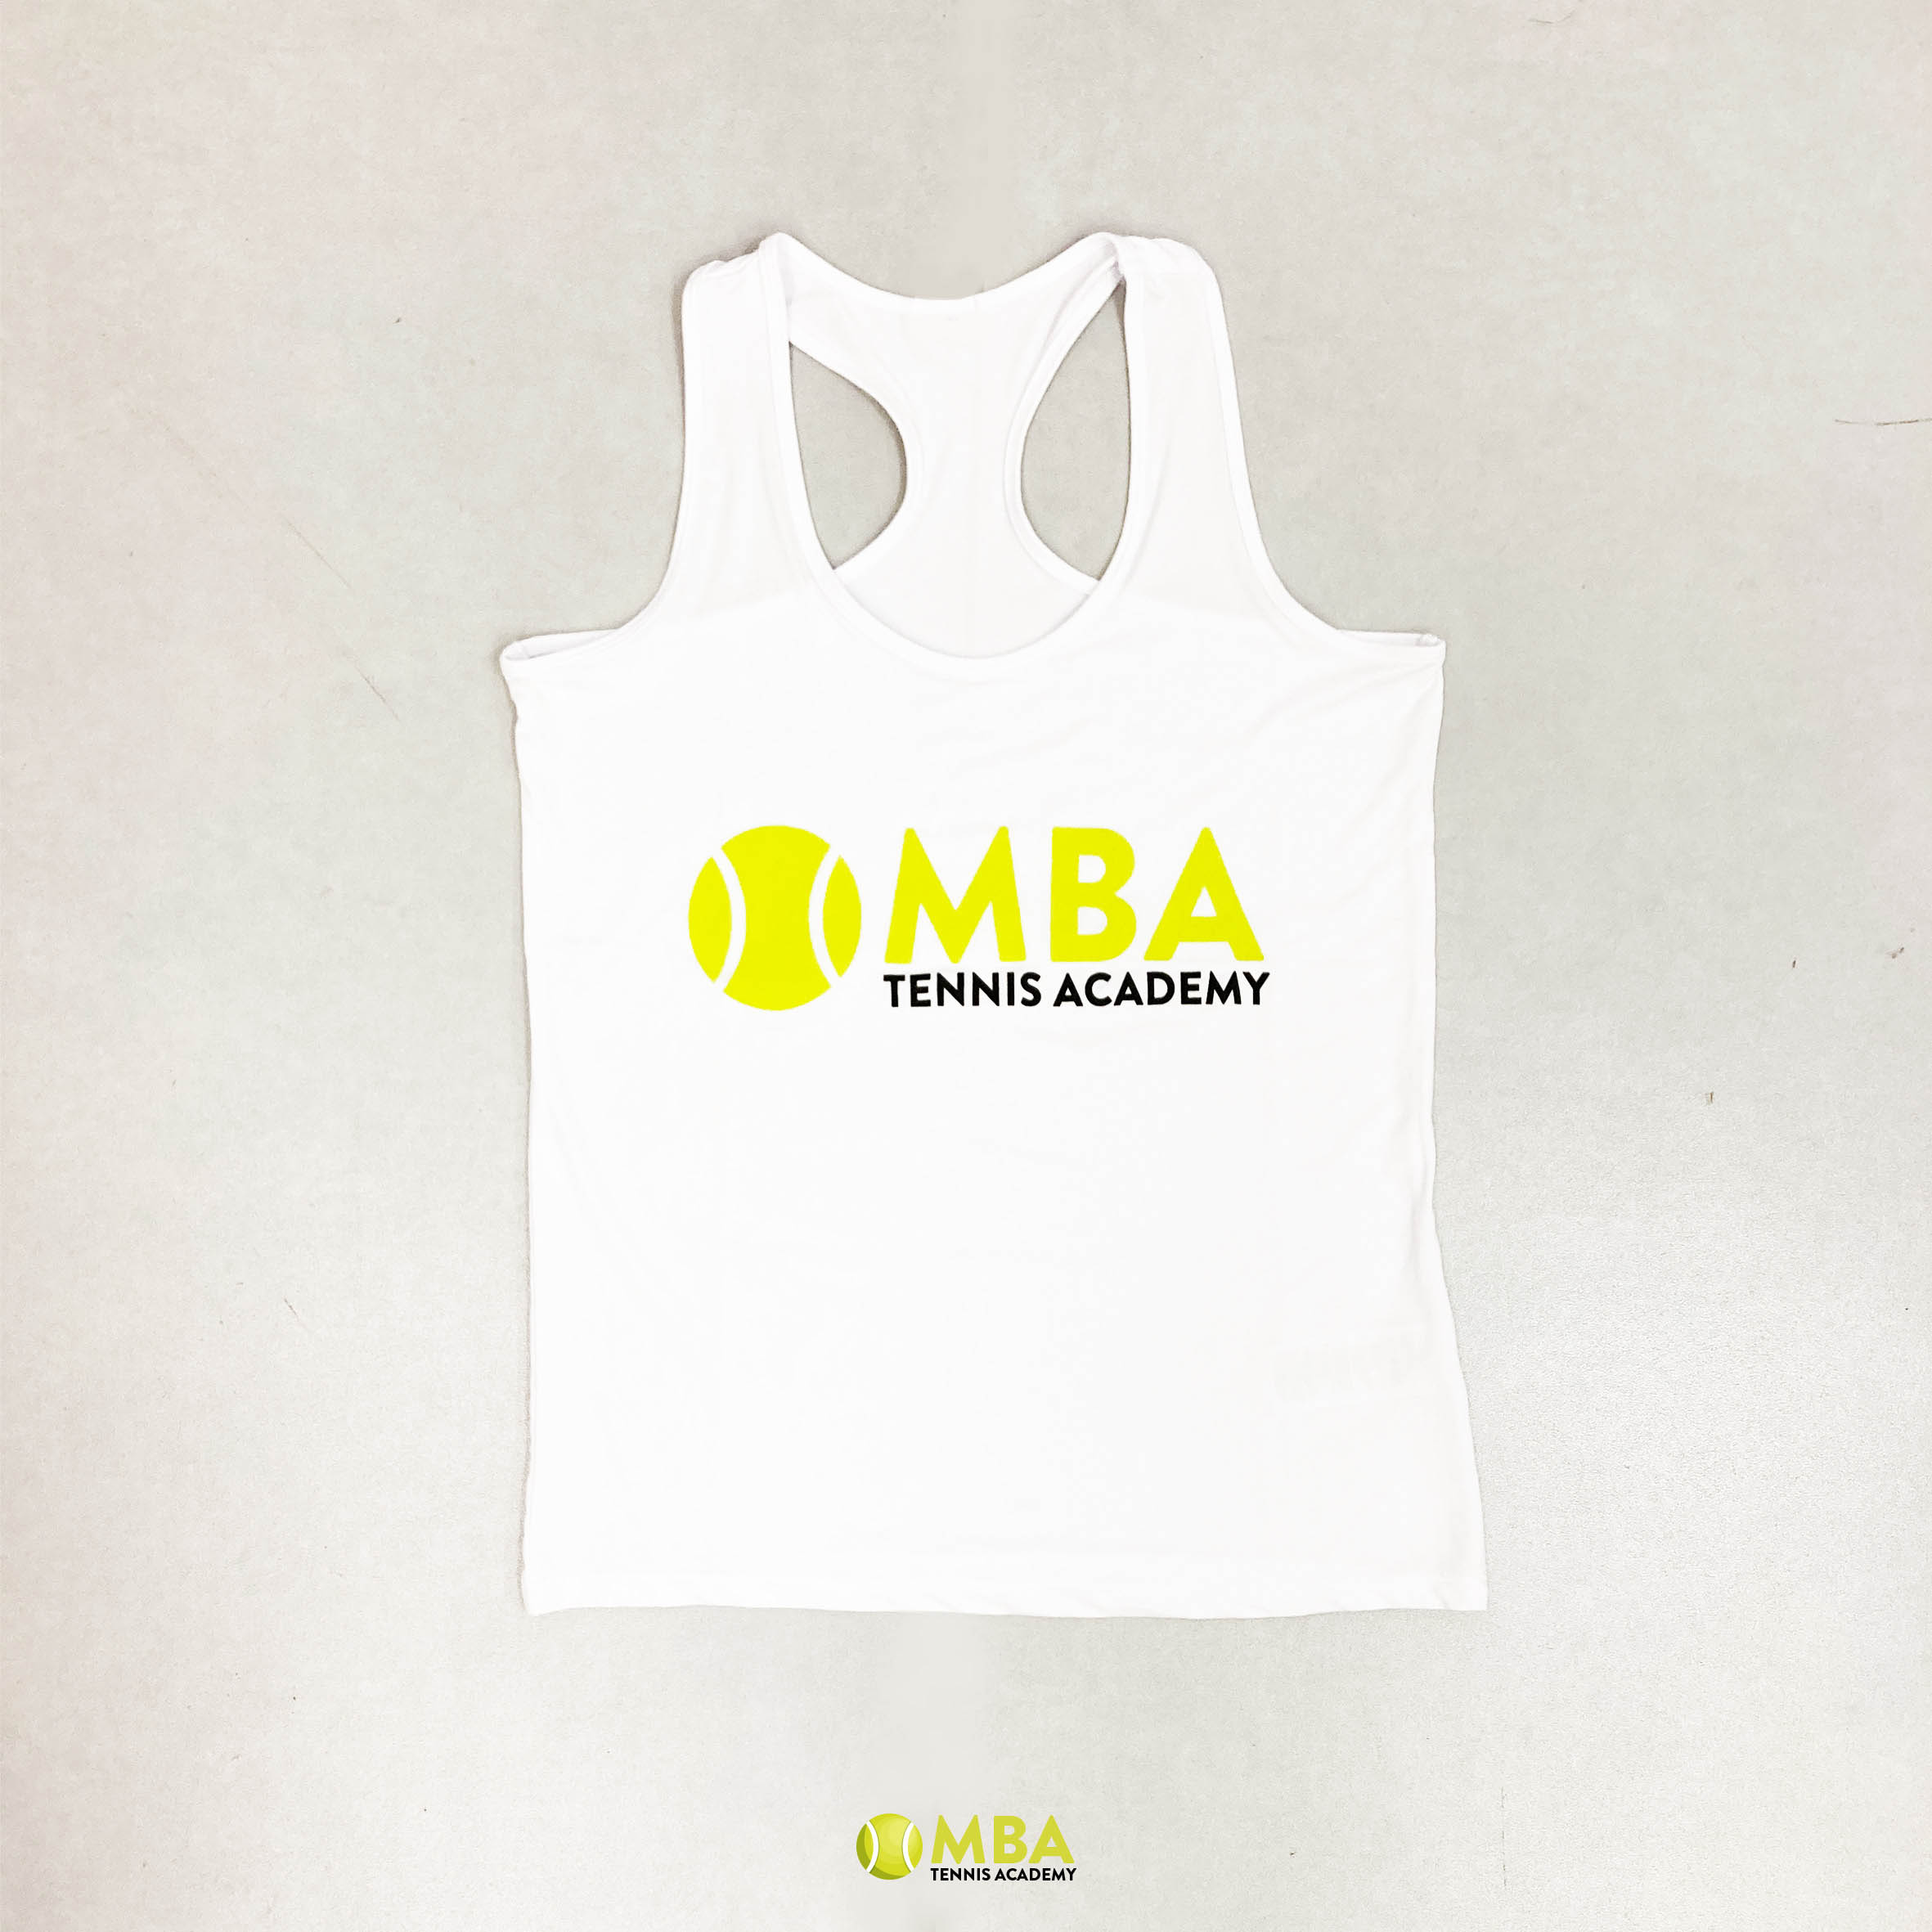 MBA-Tennis-Academy-camiseta-blanca-mujer-2